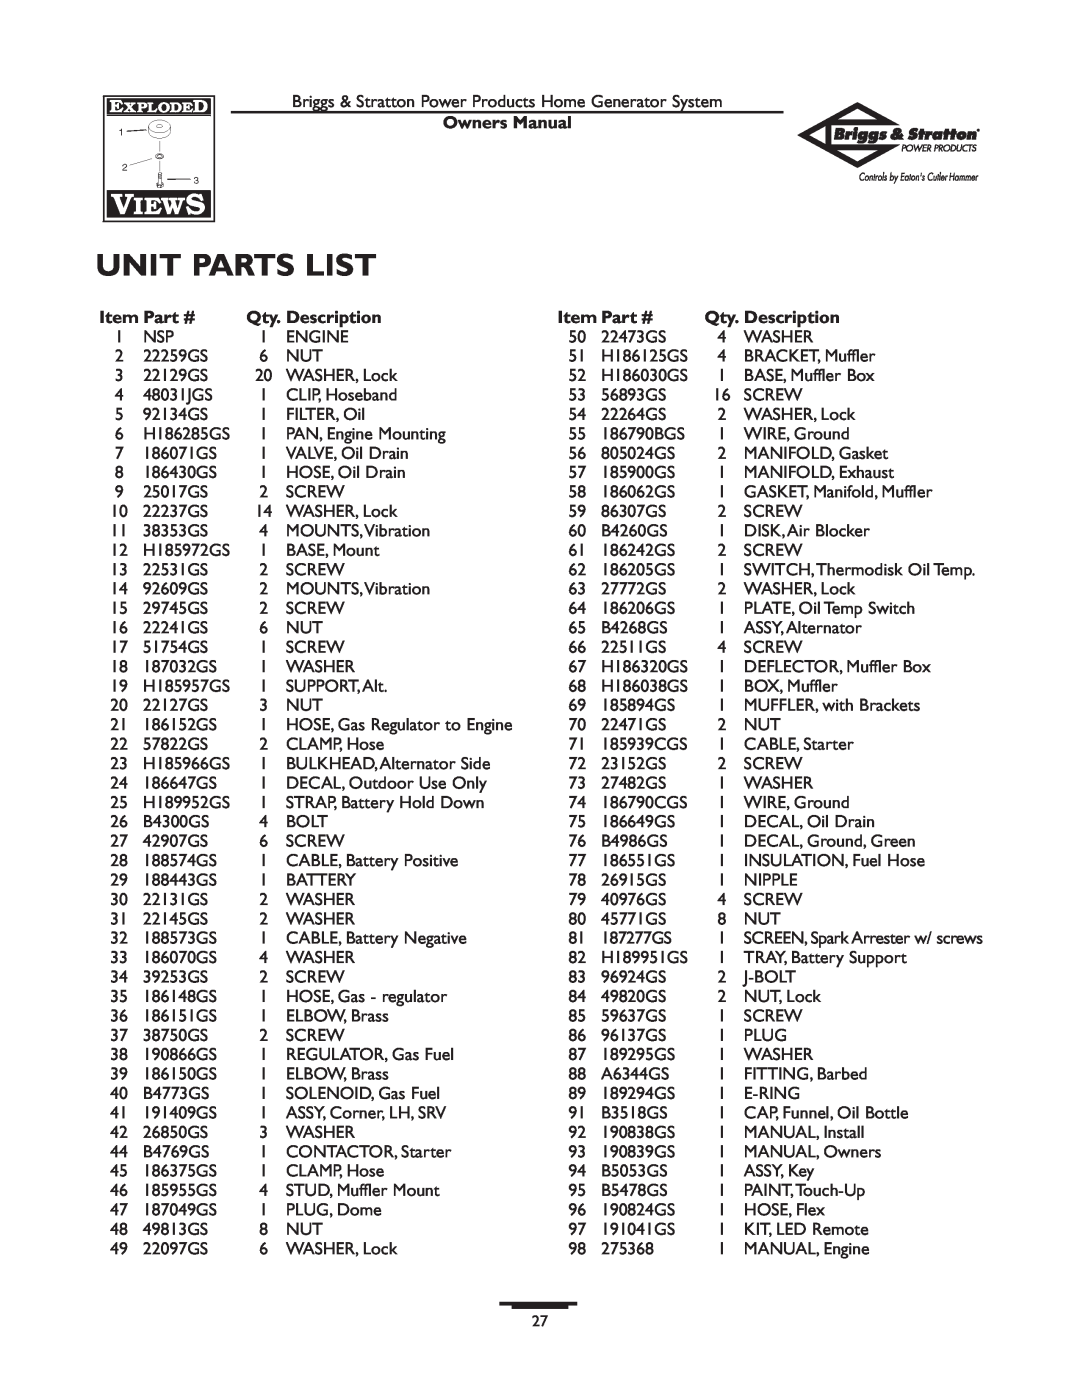 Briggs & Stratton 1679-0 owner manual Unit Parts List, Owners Manual, Item Part #, Qty. Description 